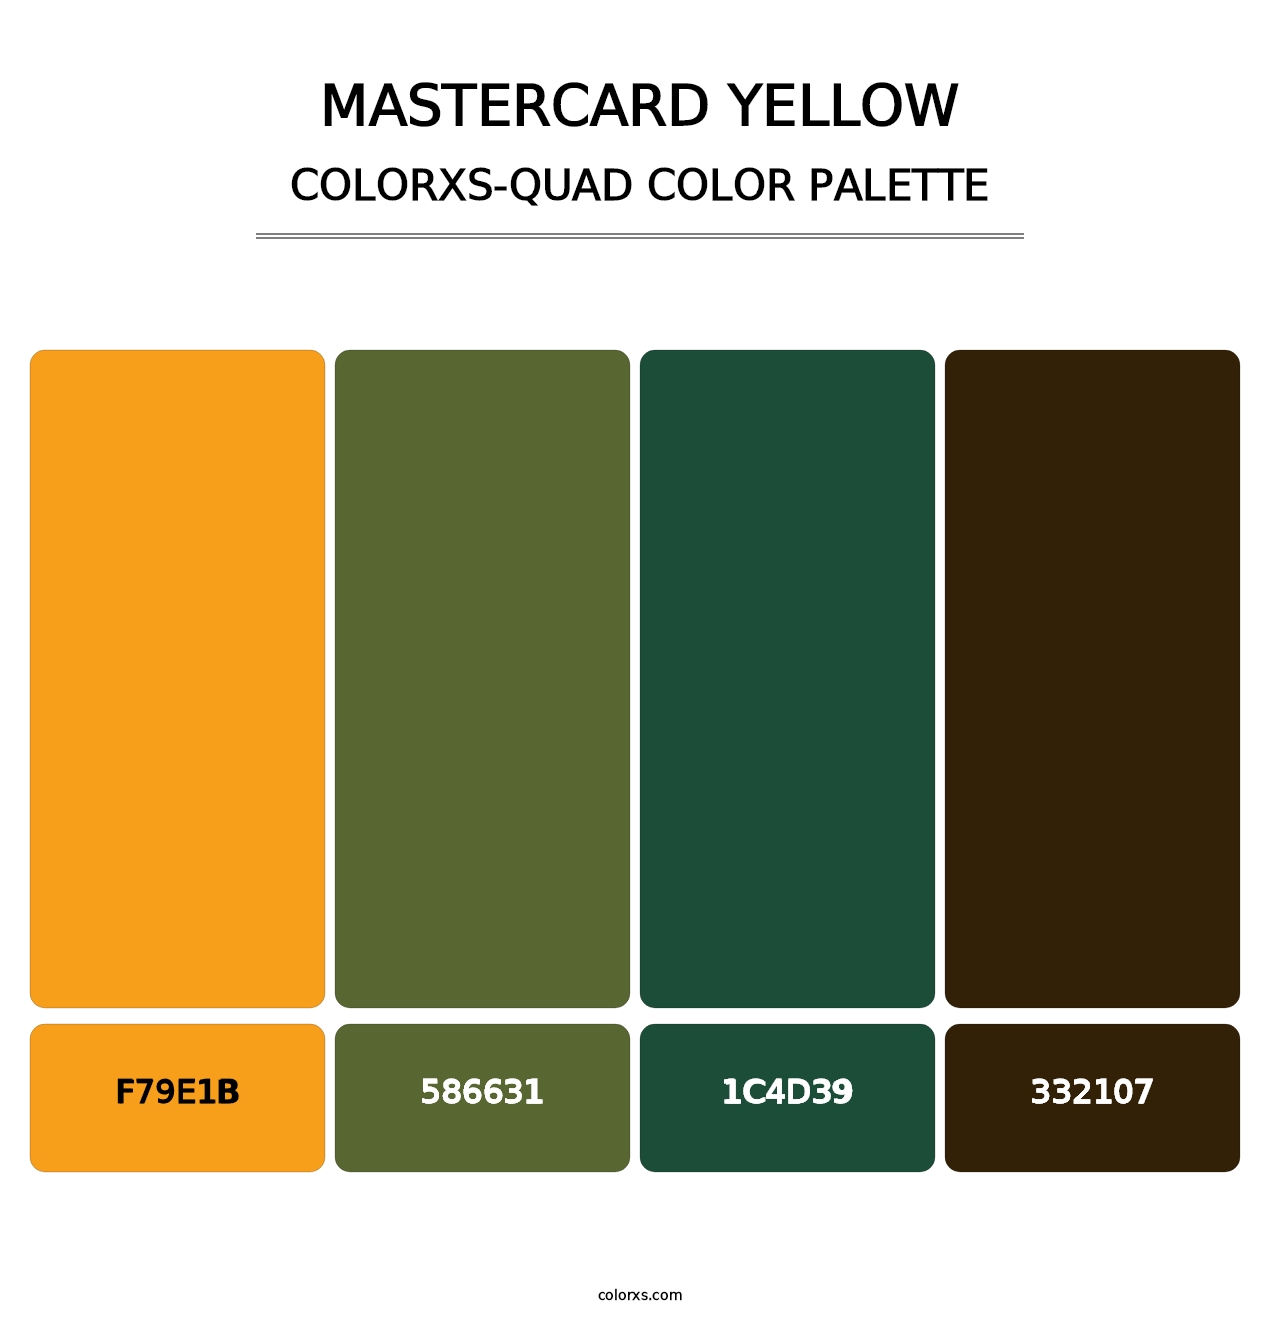 Mastercard Yellow - Colorxs Quad Palette